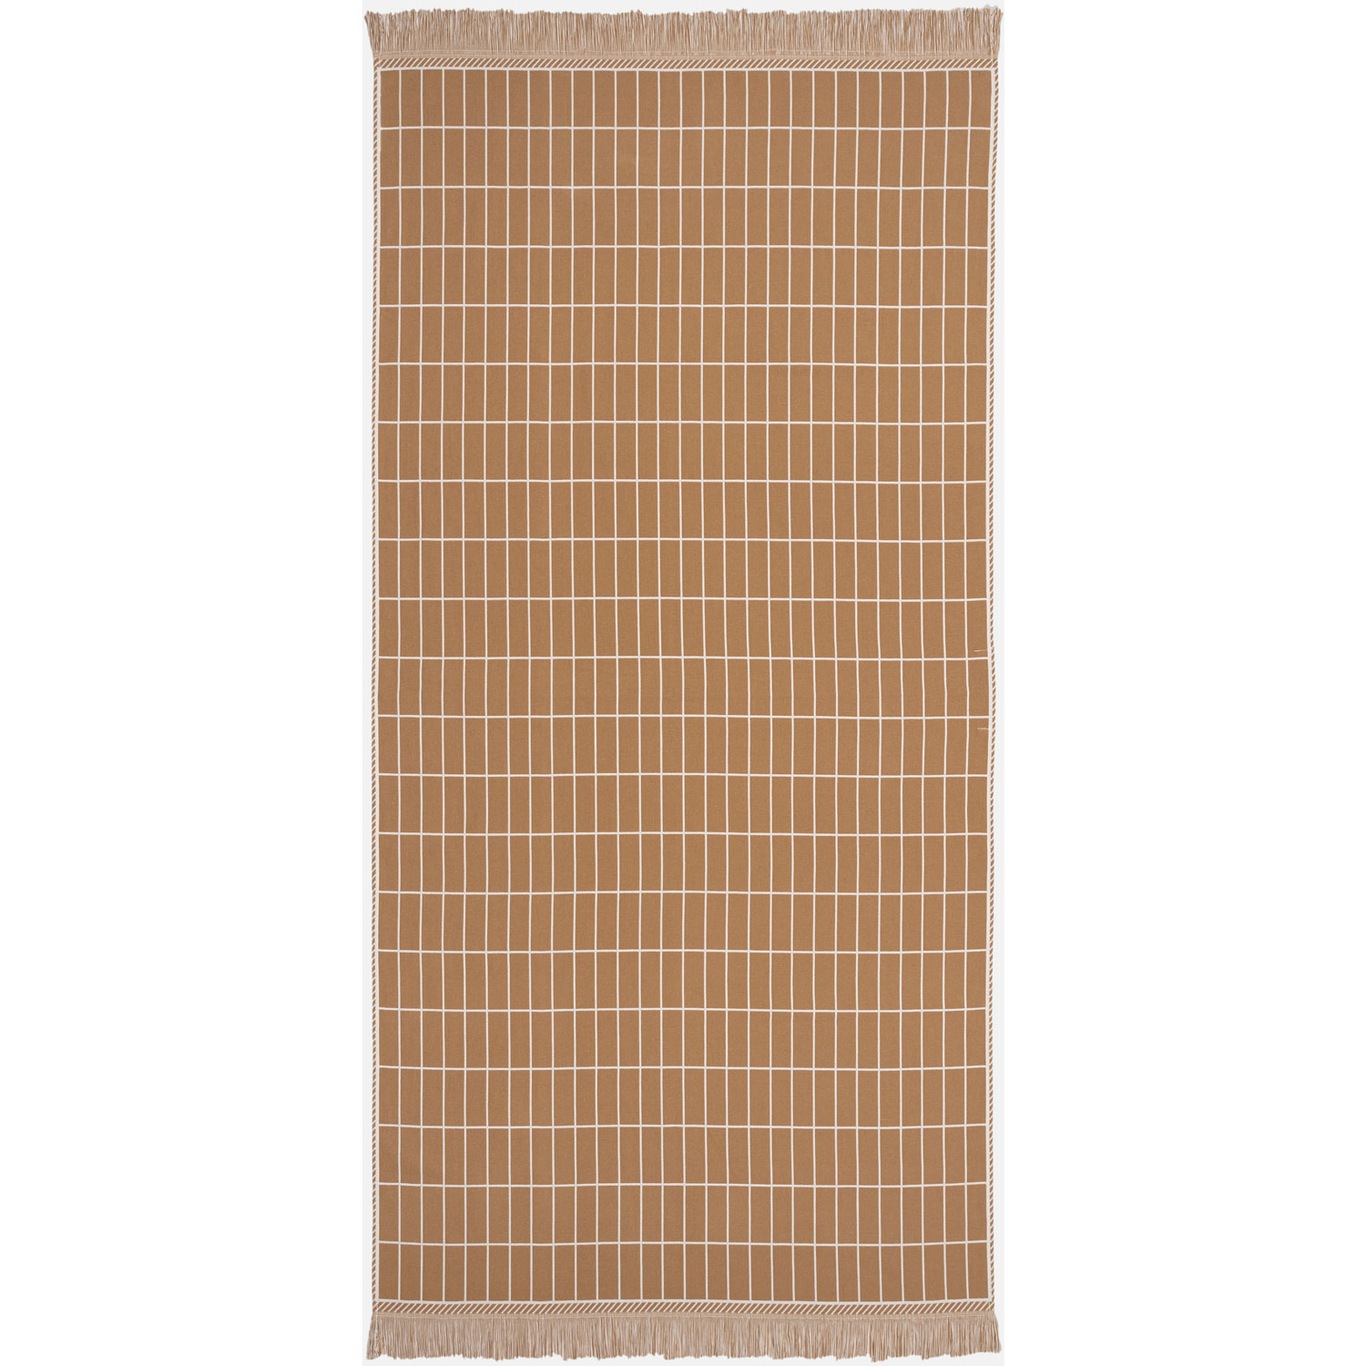 Pieni Tiiliskivi Towel Hamam Brown / Off-white, 70x150 cm